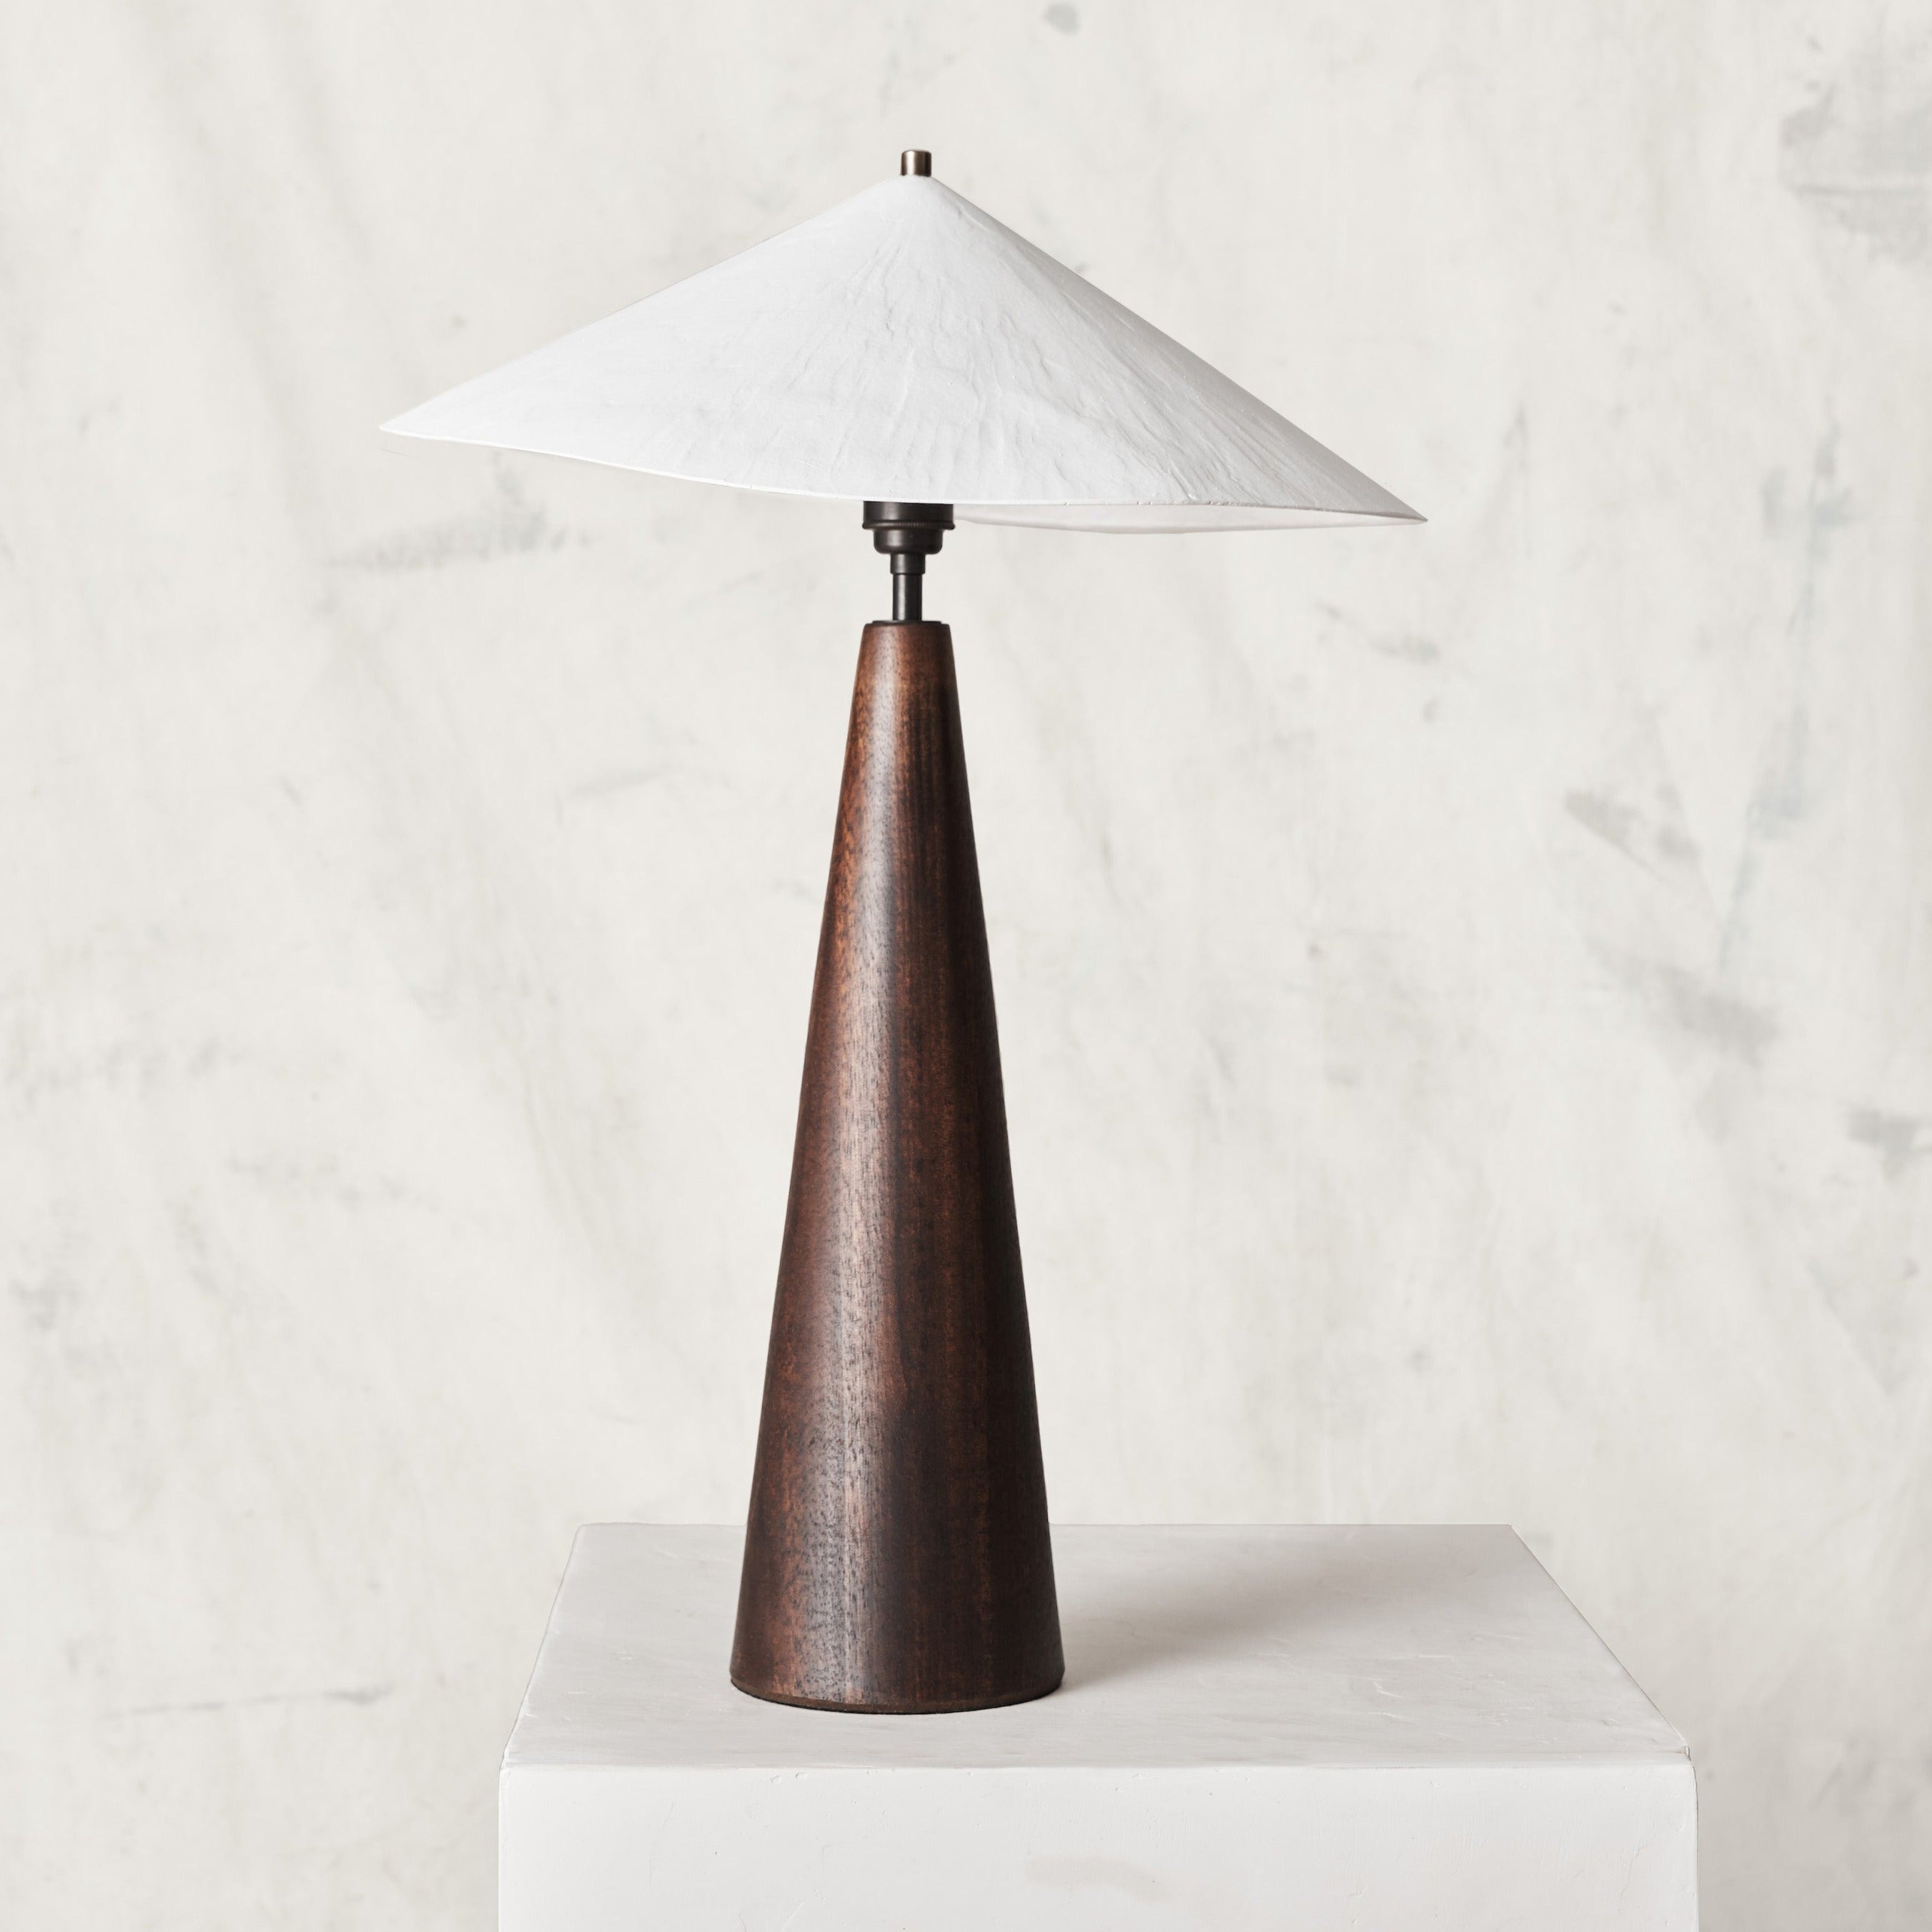 Wobble table lamp (dark base)